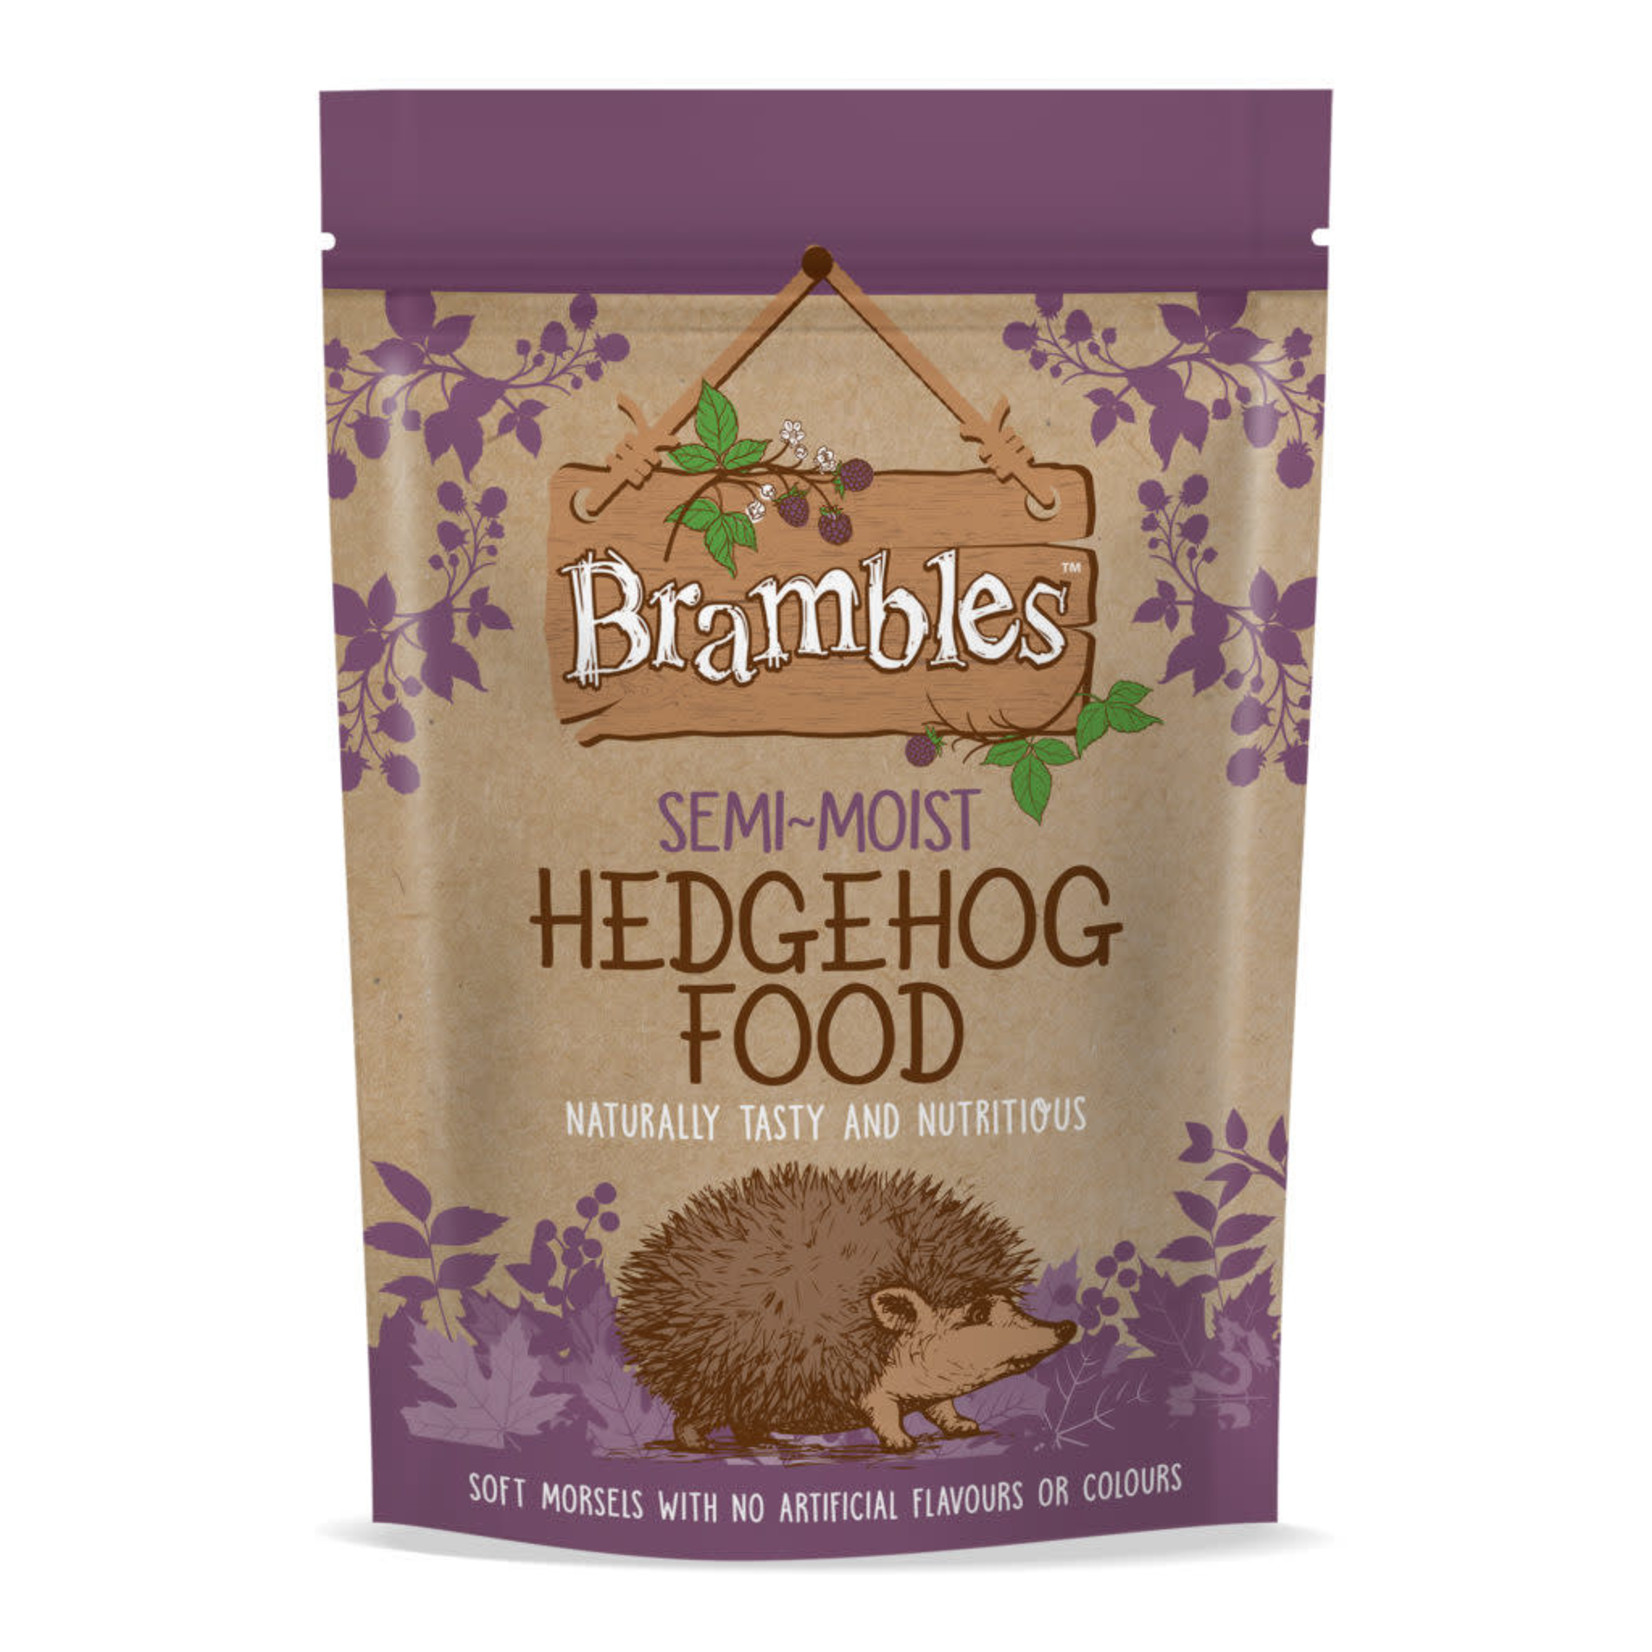 Brambles Semi-Moist Hedgehog Food, 850g